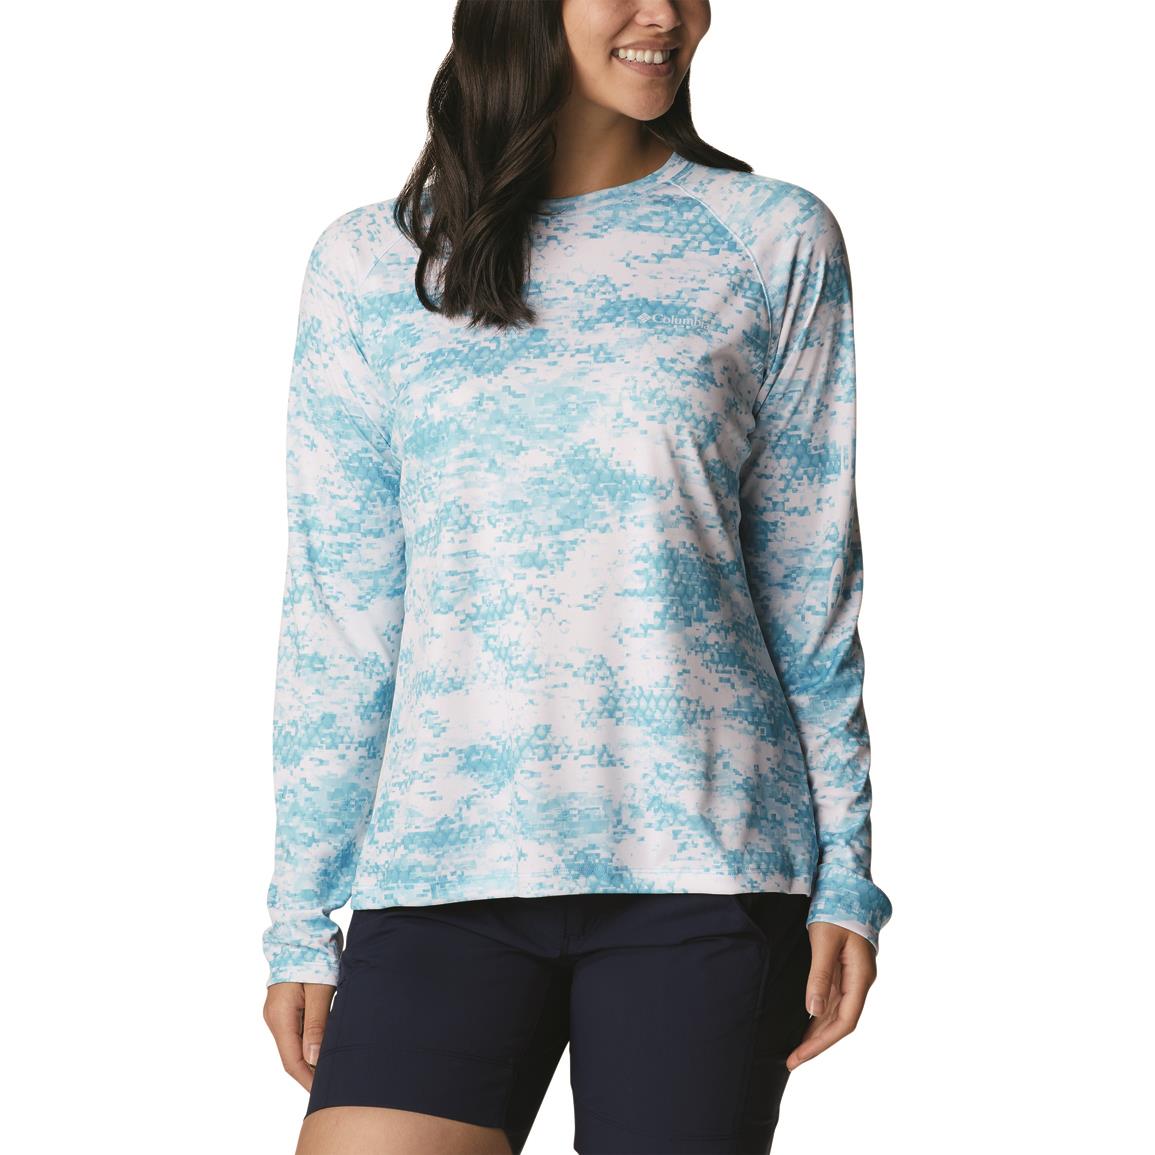 Columbia PFG Women's Super Tidal Tee Long Sleeve Shirt, Atoll Pfg Camo Print